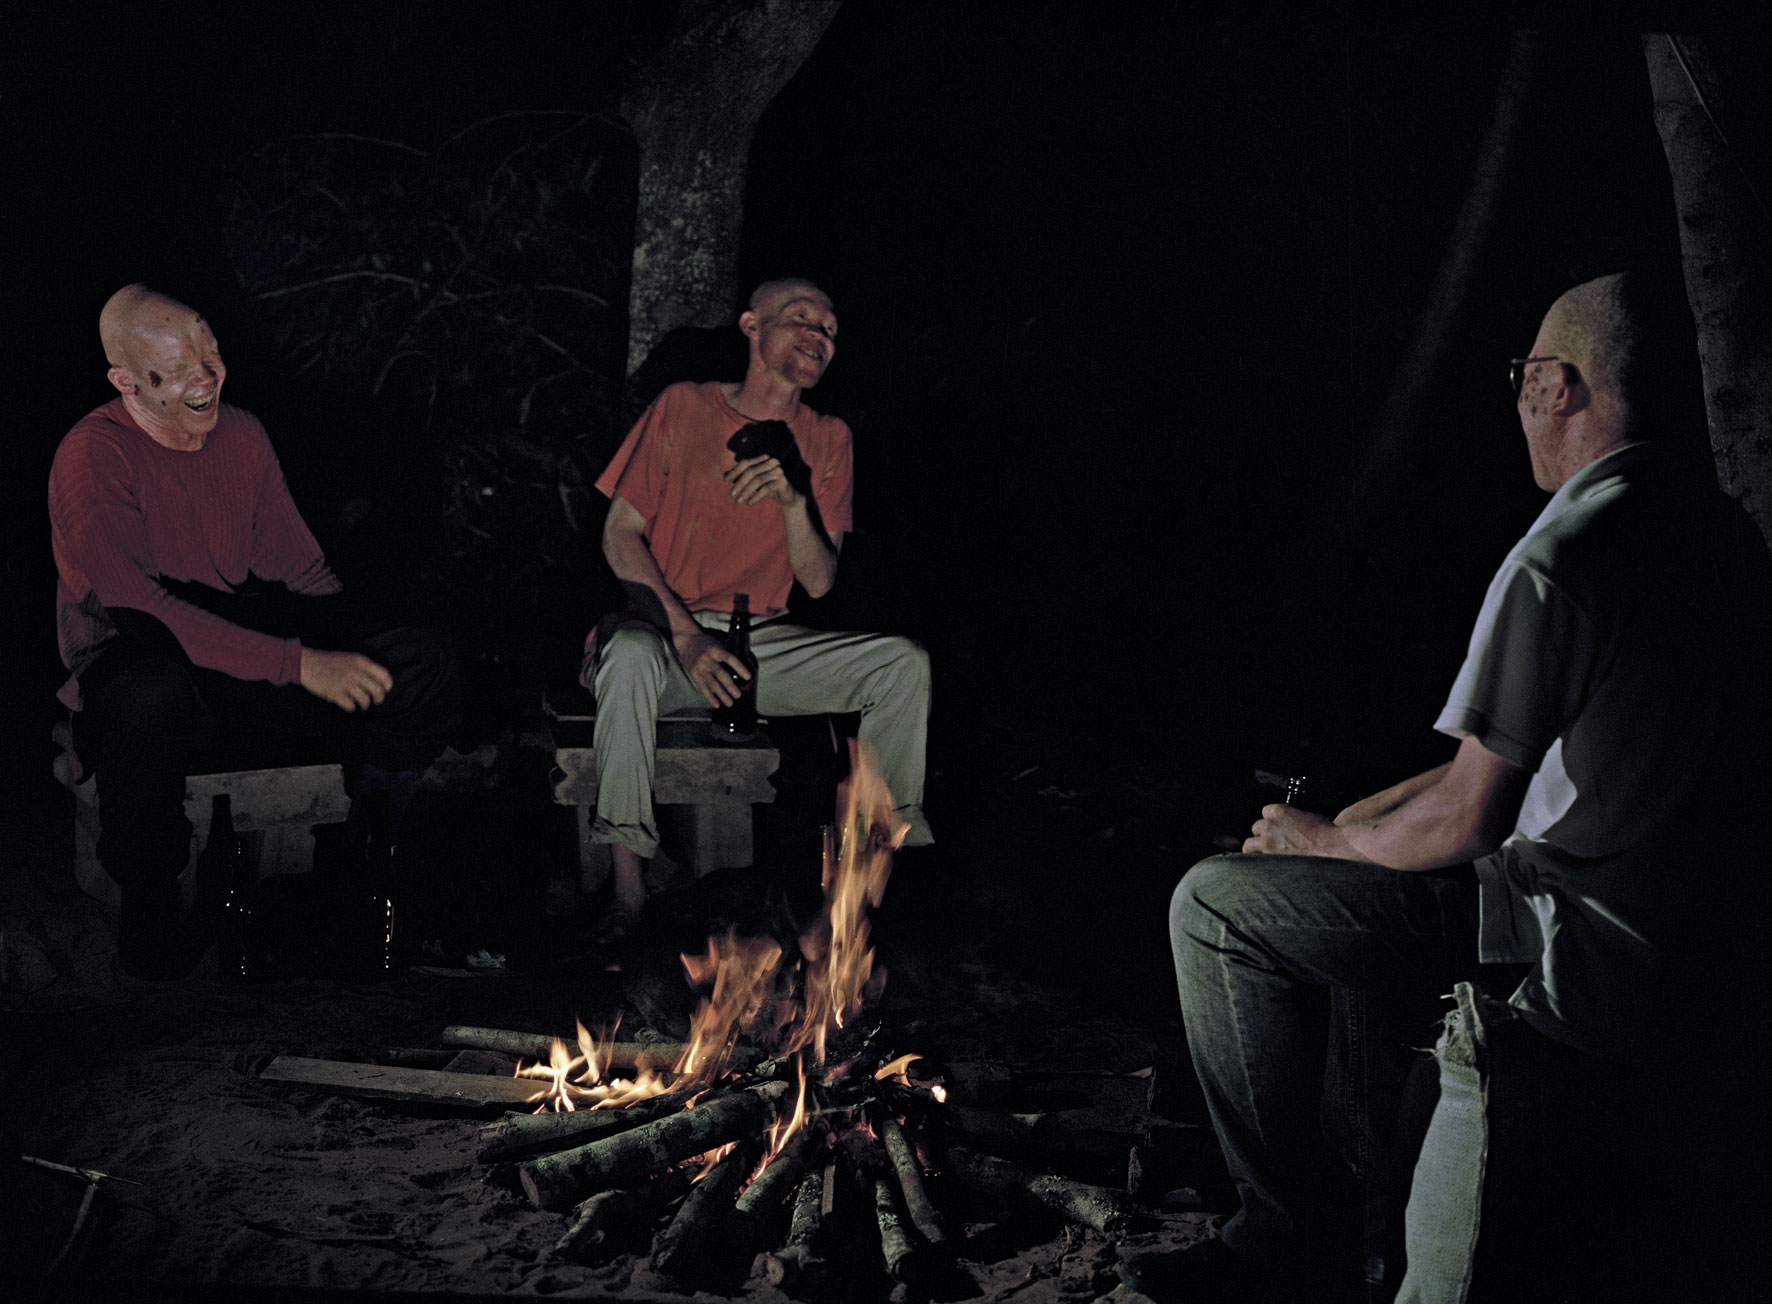 João Maria Gusmão + Pedro Paiva. Three albinos telling jokes at the fire, 2013. Chromogenic colour print, 60 x 90 cm